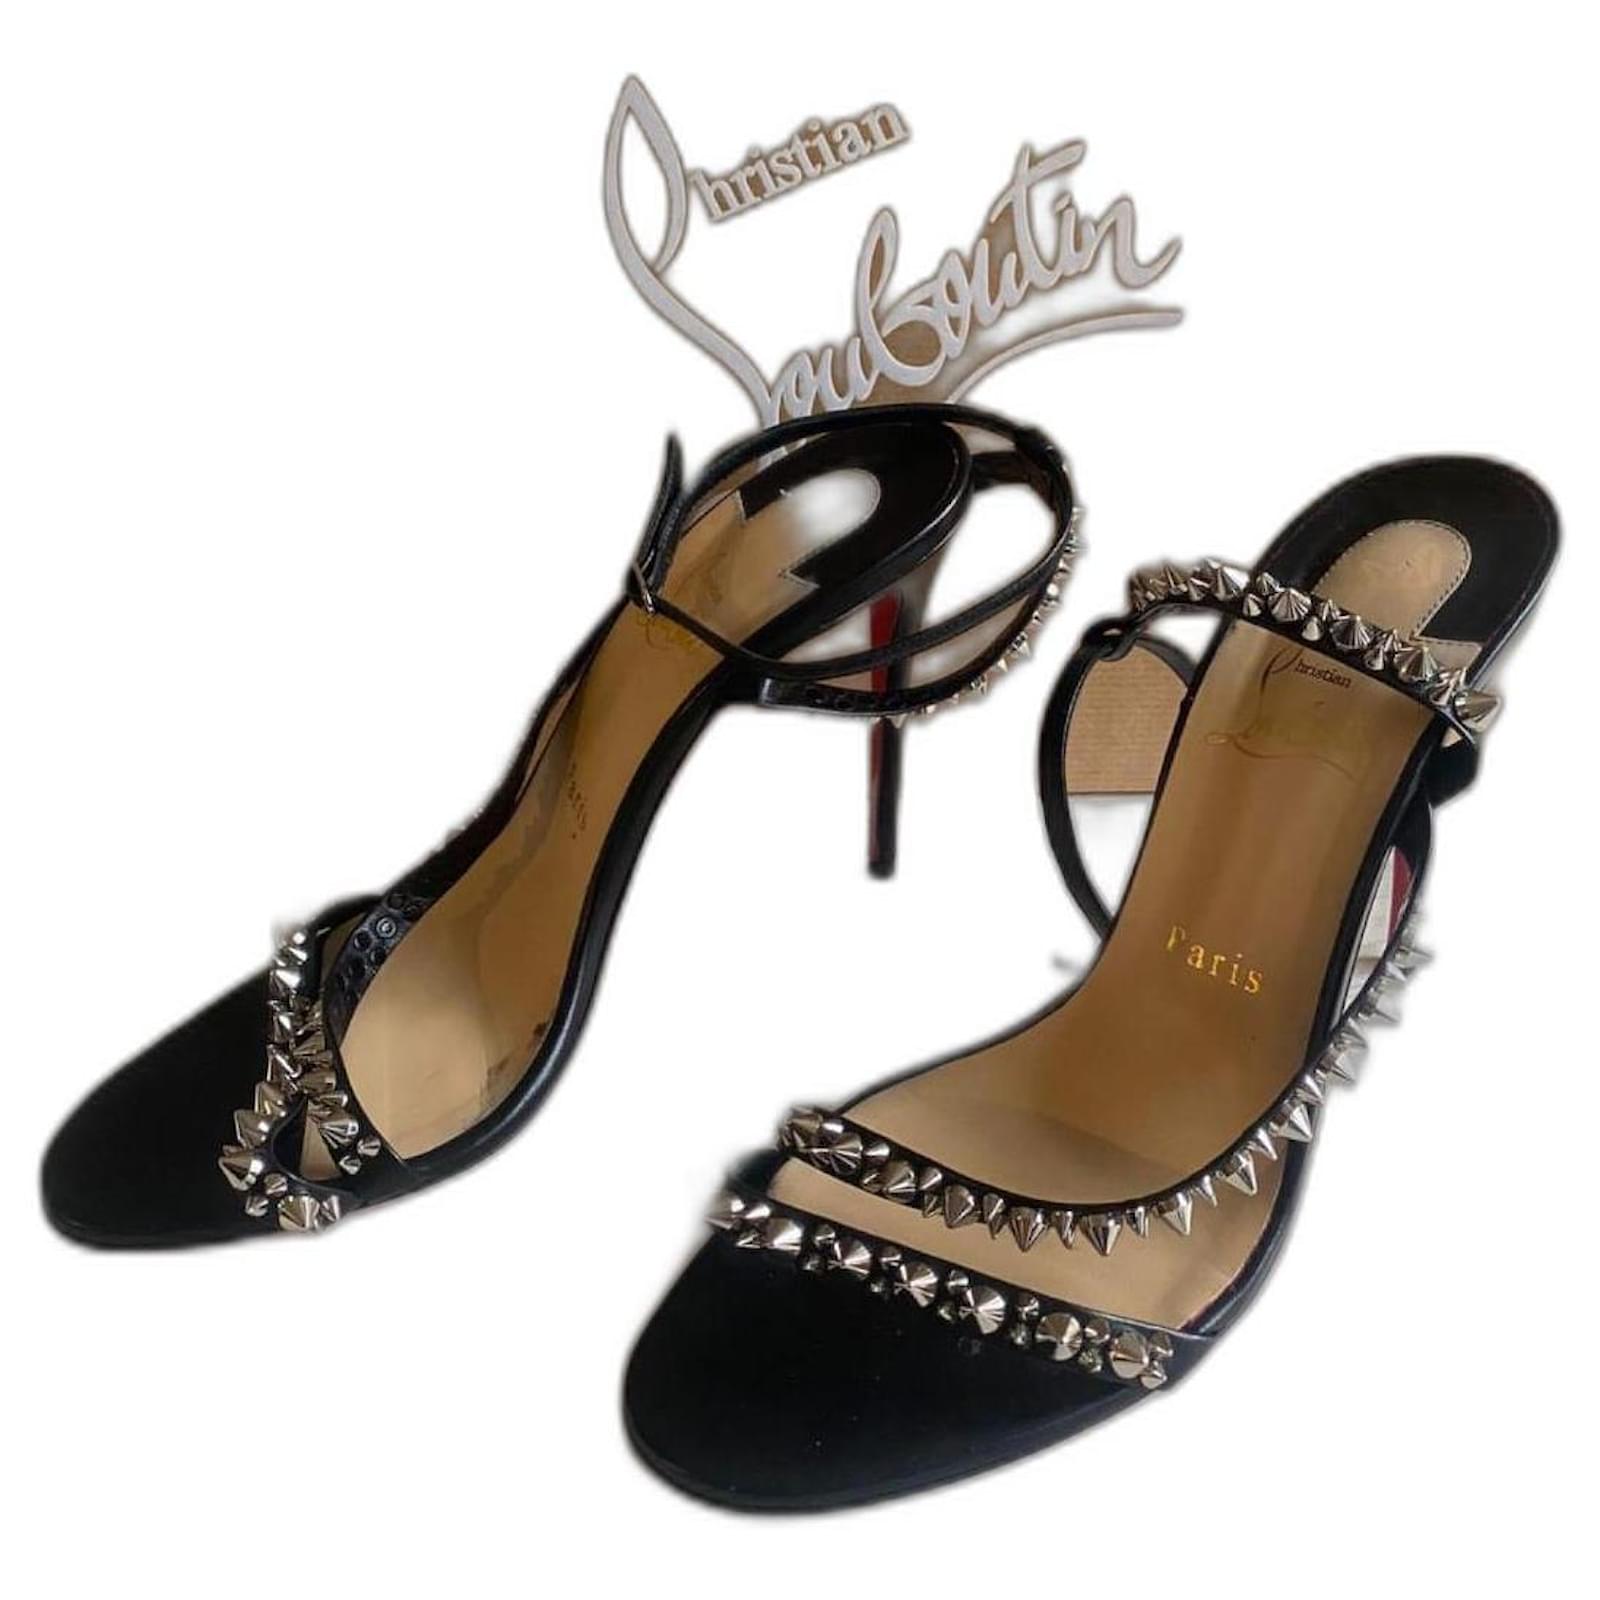 CHRISTIAN LOUBOUTIN: Mafaldina sandal in leather with studs - Black